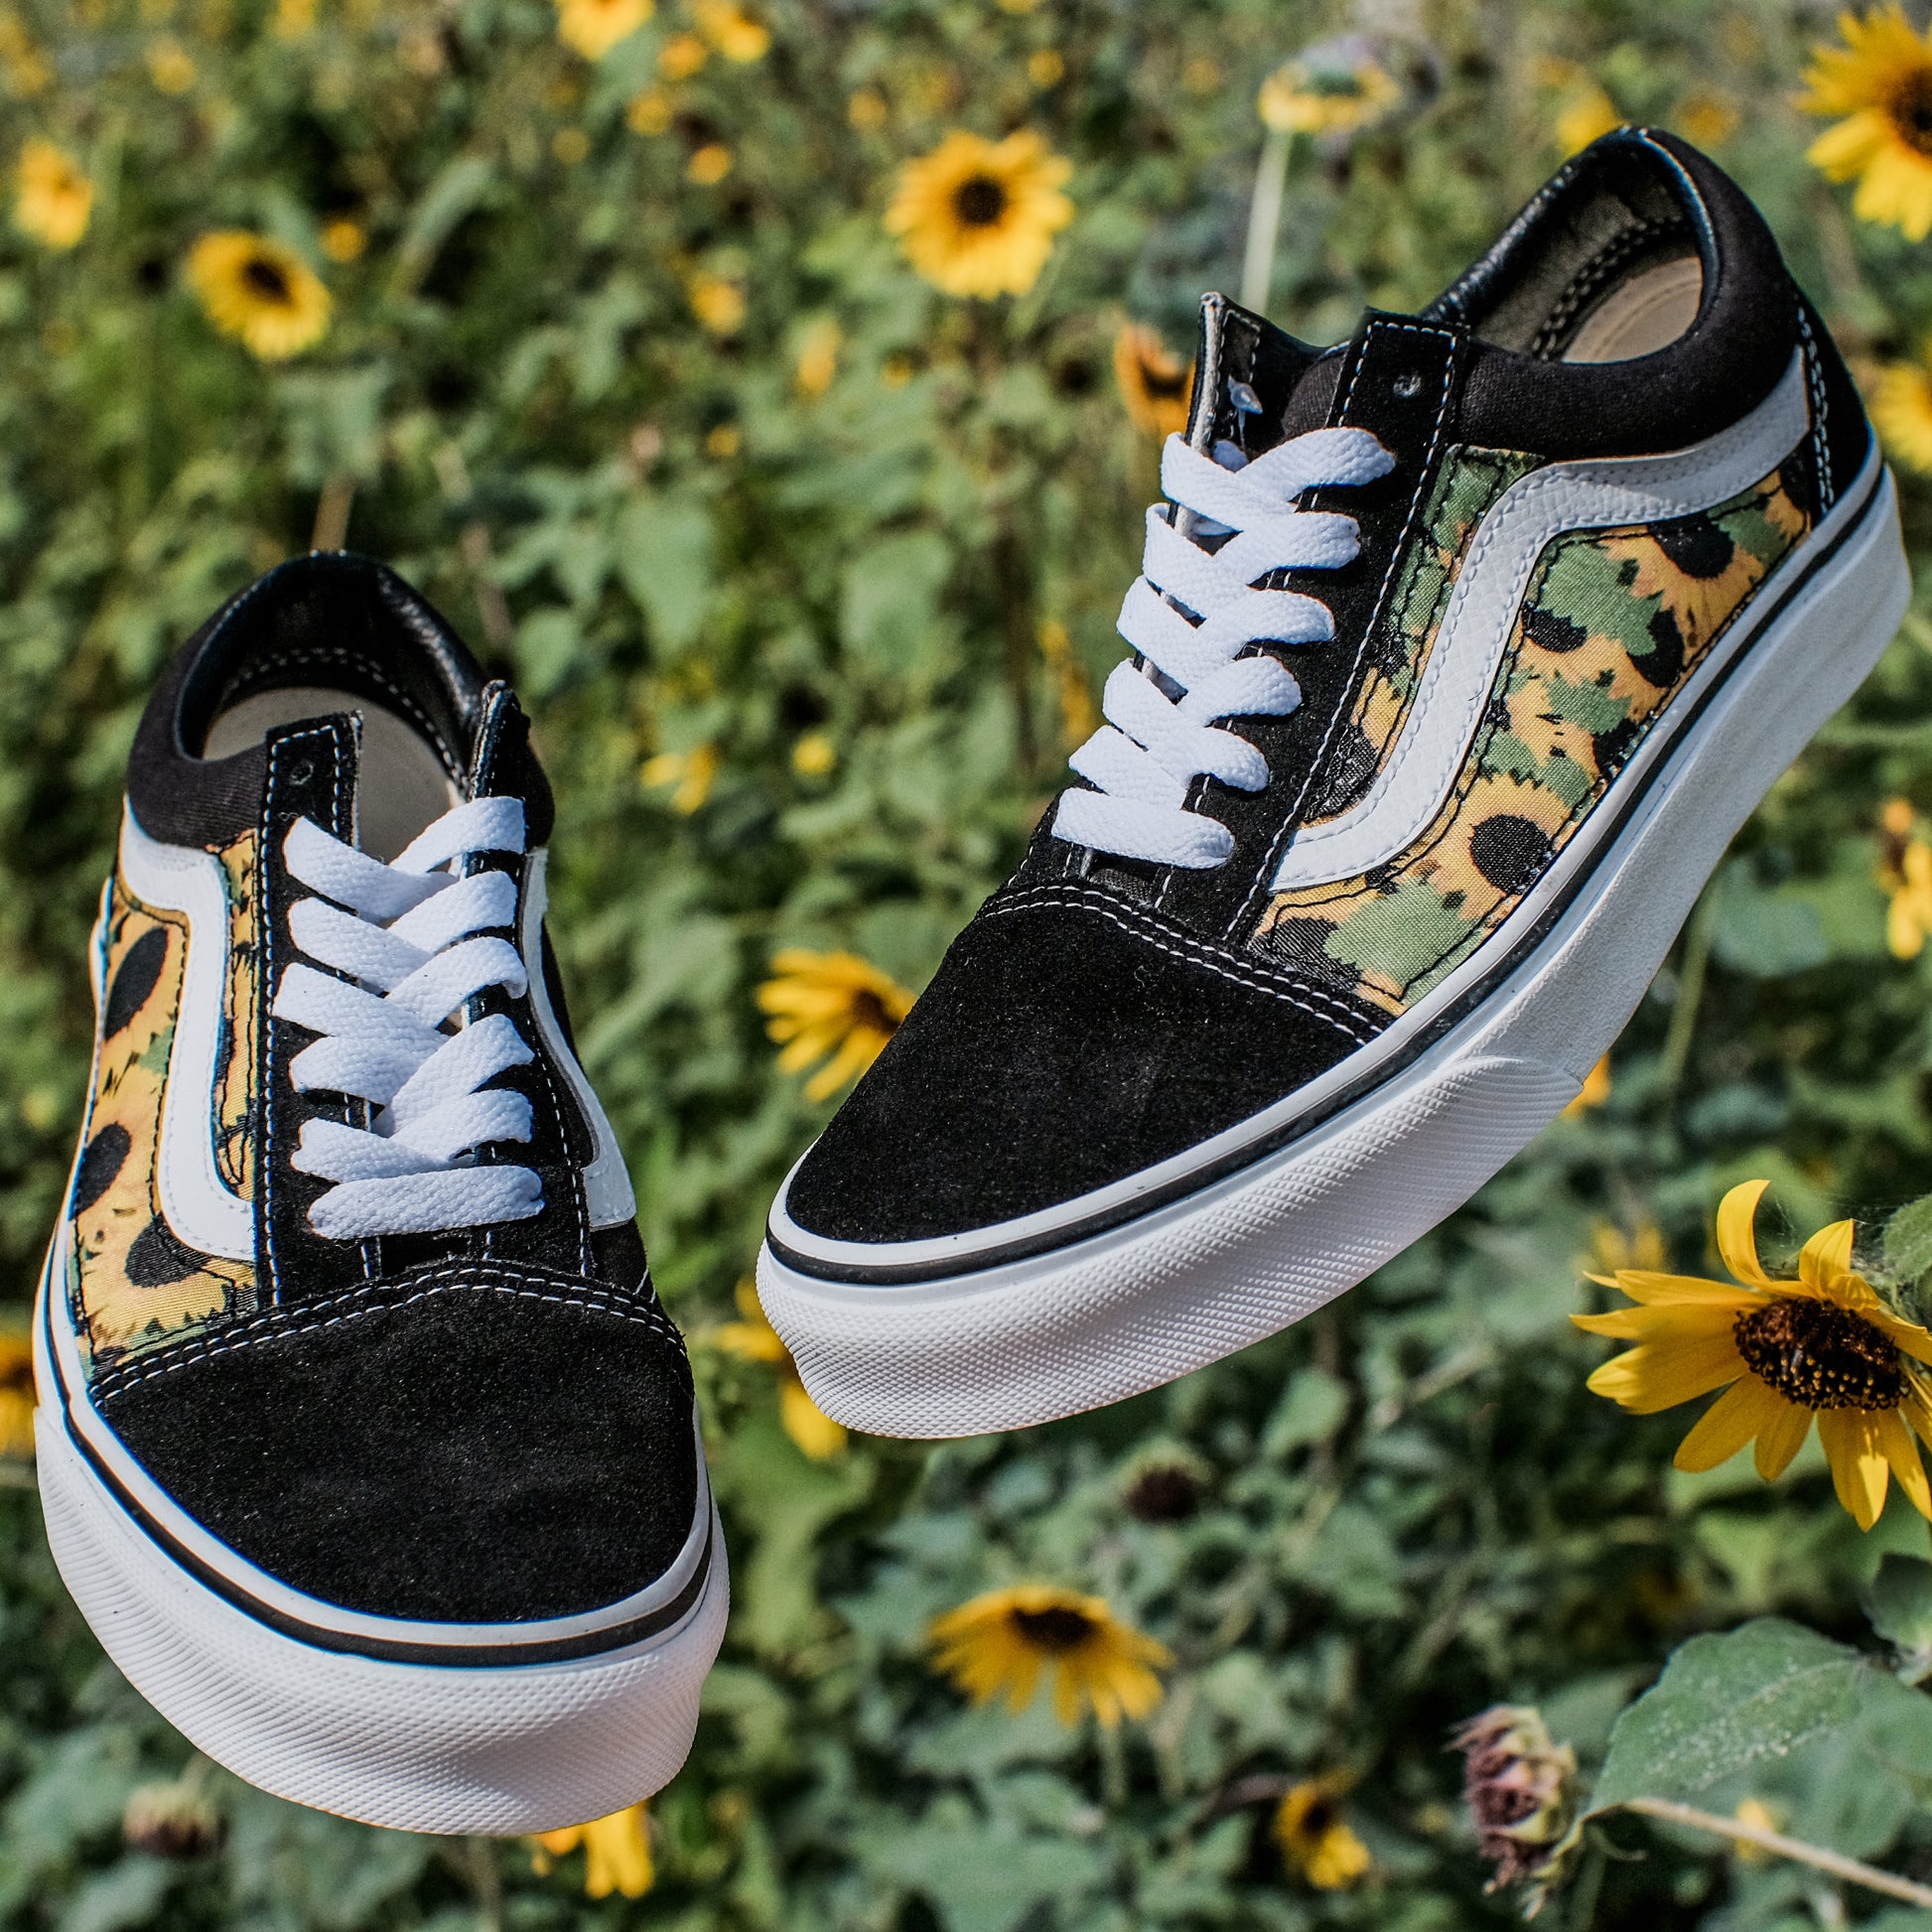 Custom Vans/custom Sneakers Sunflower/embroidered Vans 